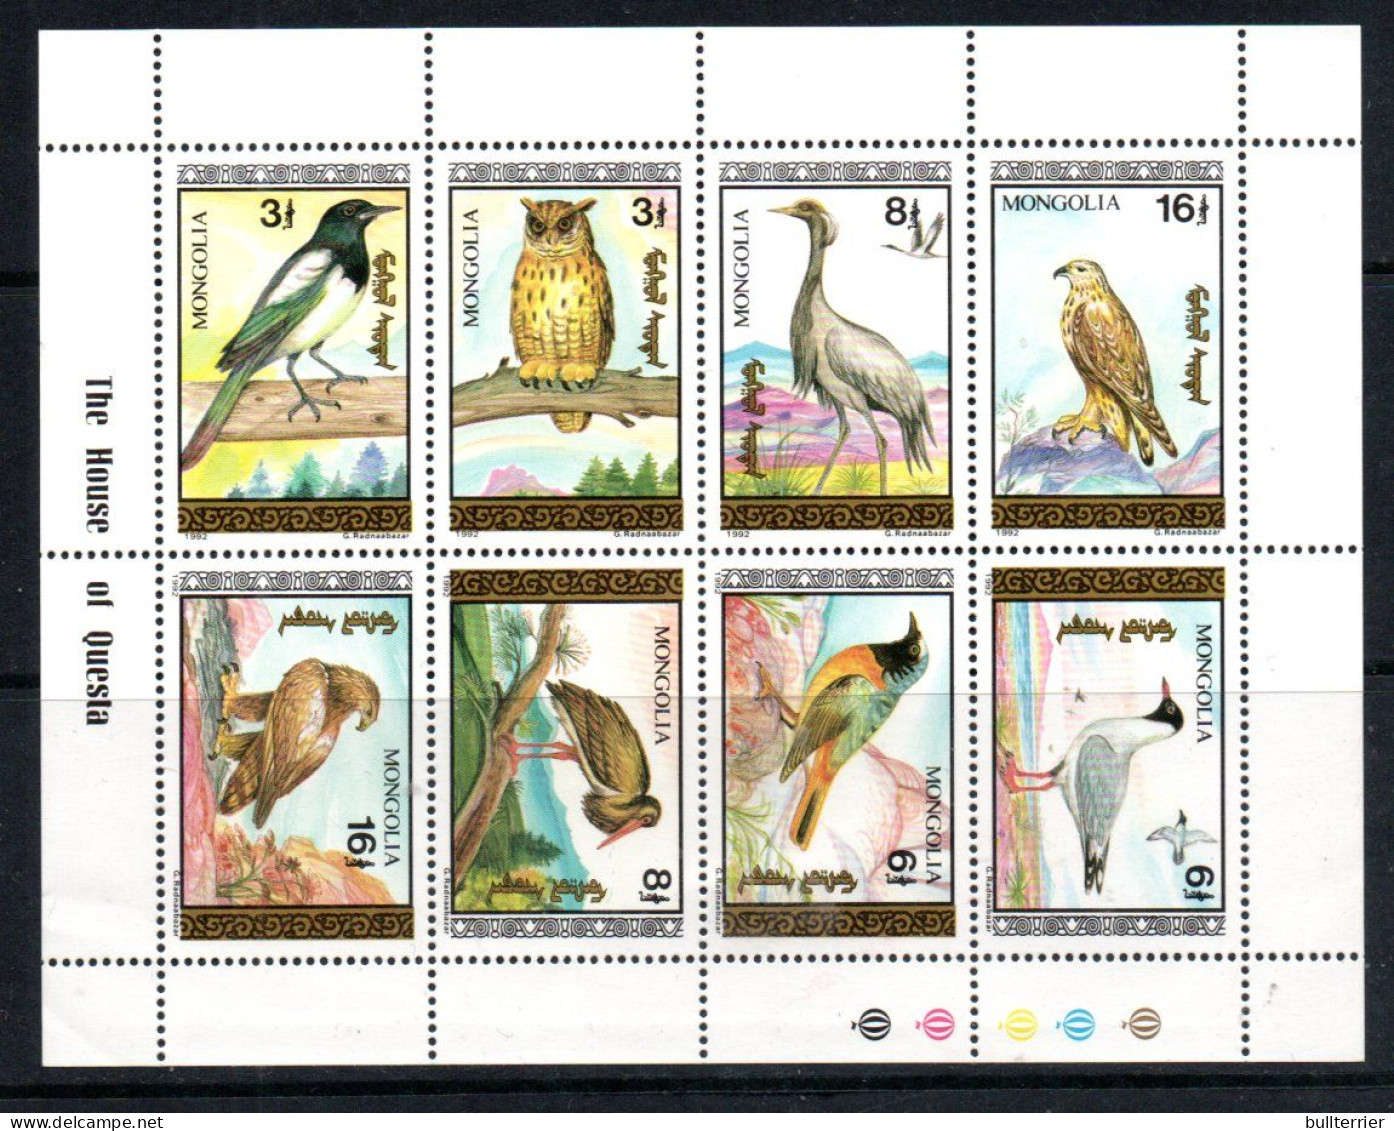 BIRDS - Mongolia- 1992- Birds Sheetlet Of 8 Mint Never Hinged, SG Cat £21.10 - Pigeons & Columbiformes